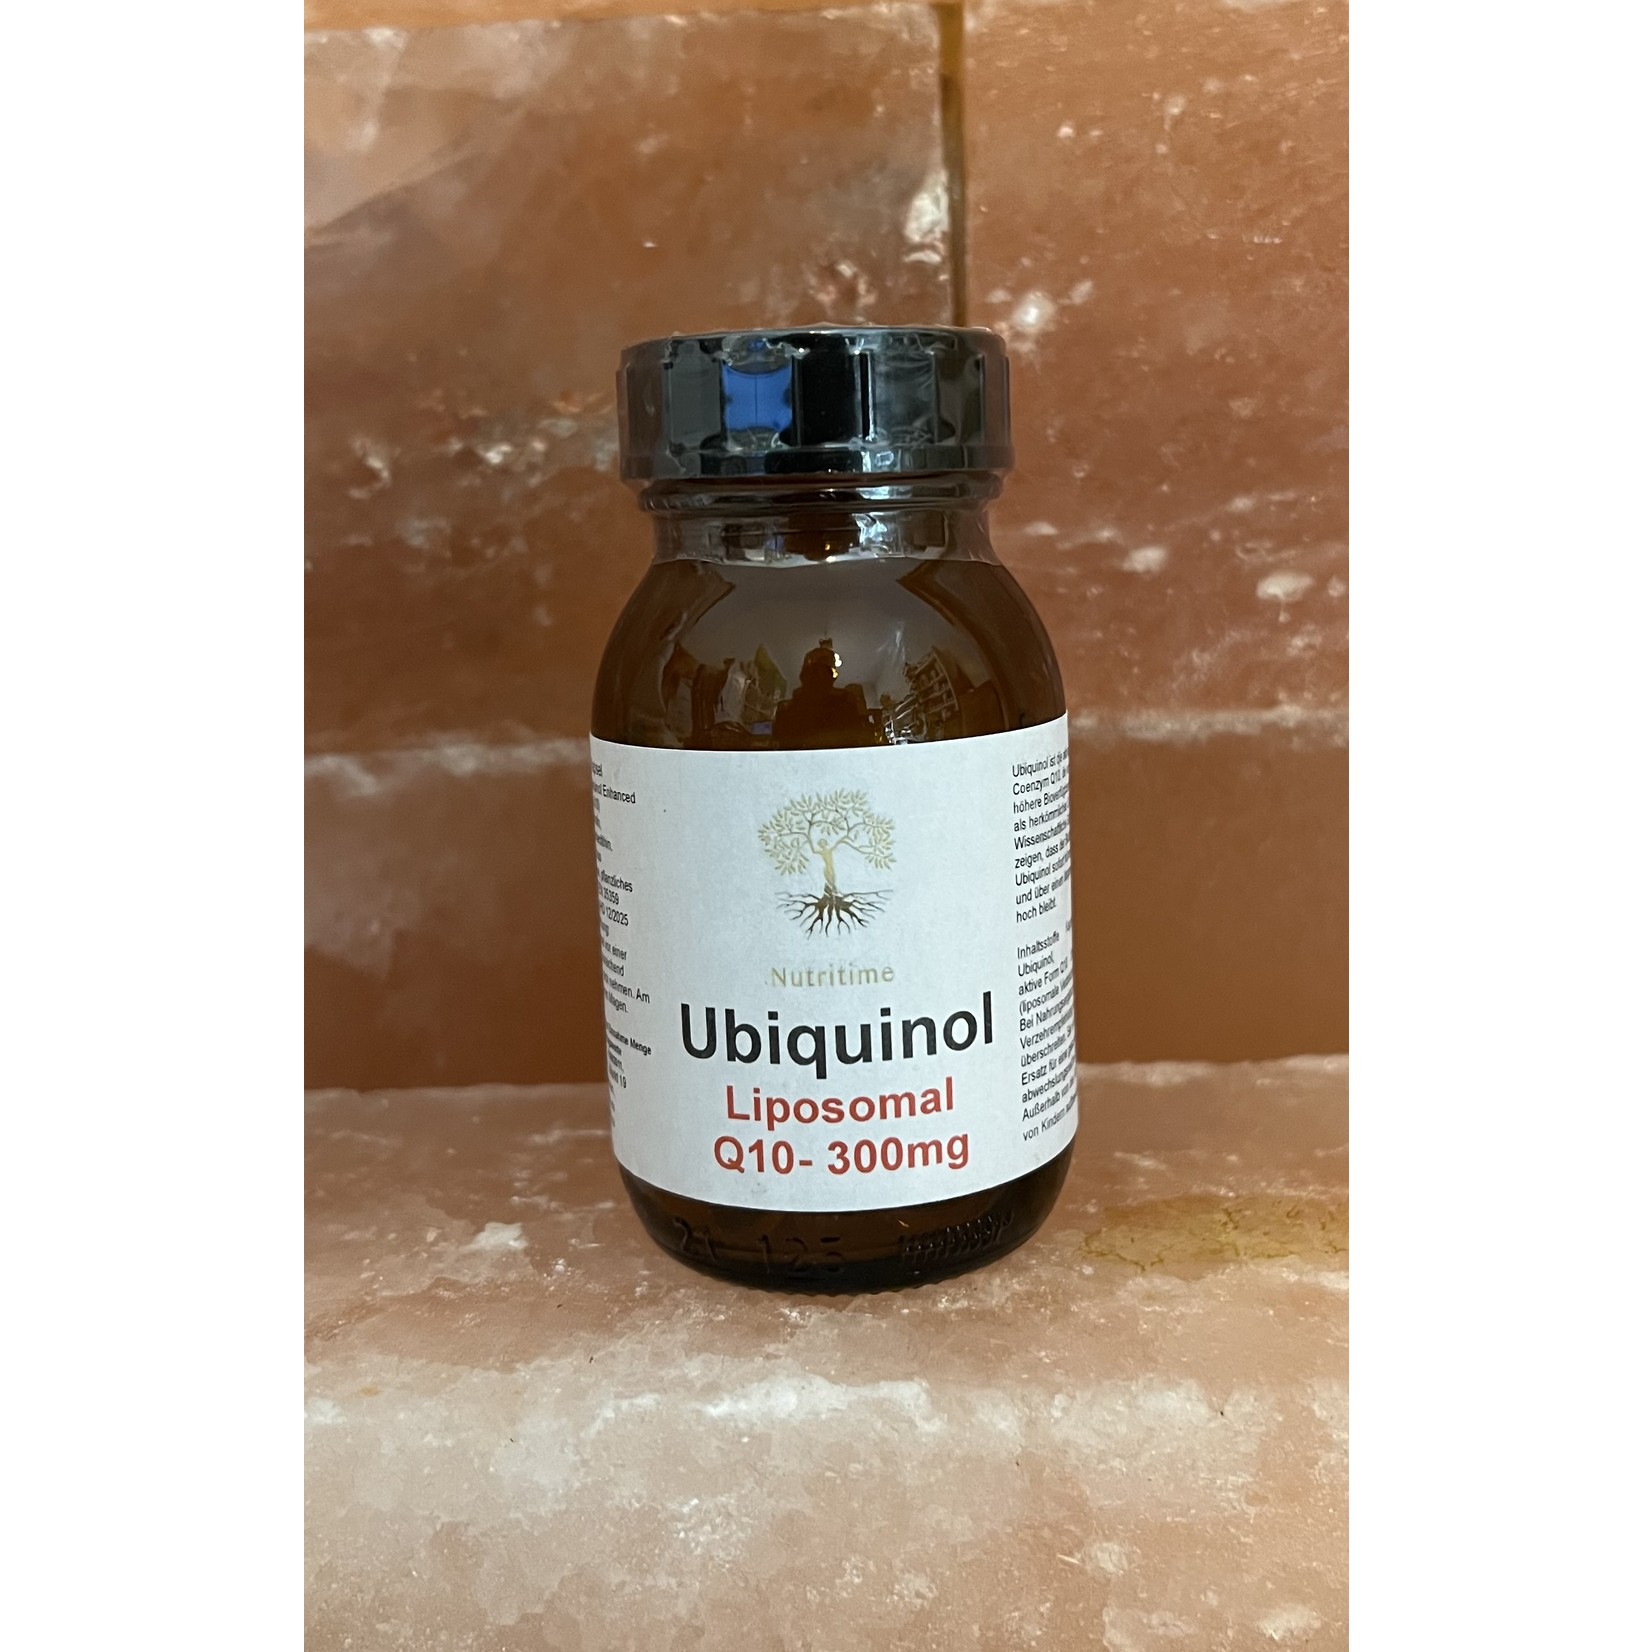 Nutritime Ubiquinol, CoQ10 200mg High